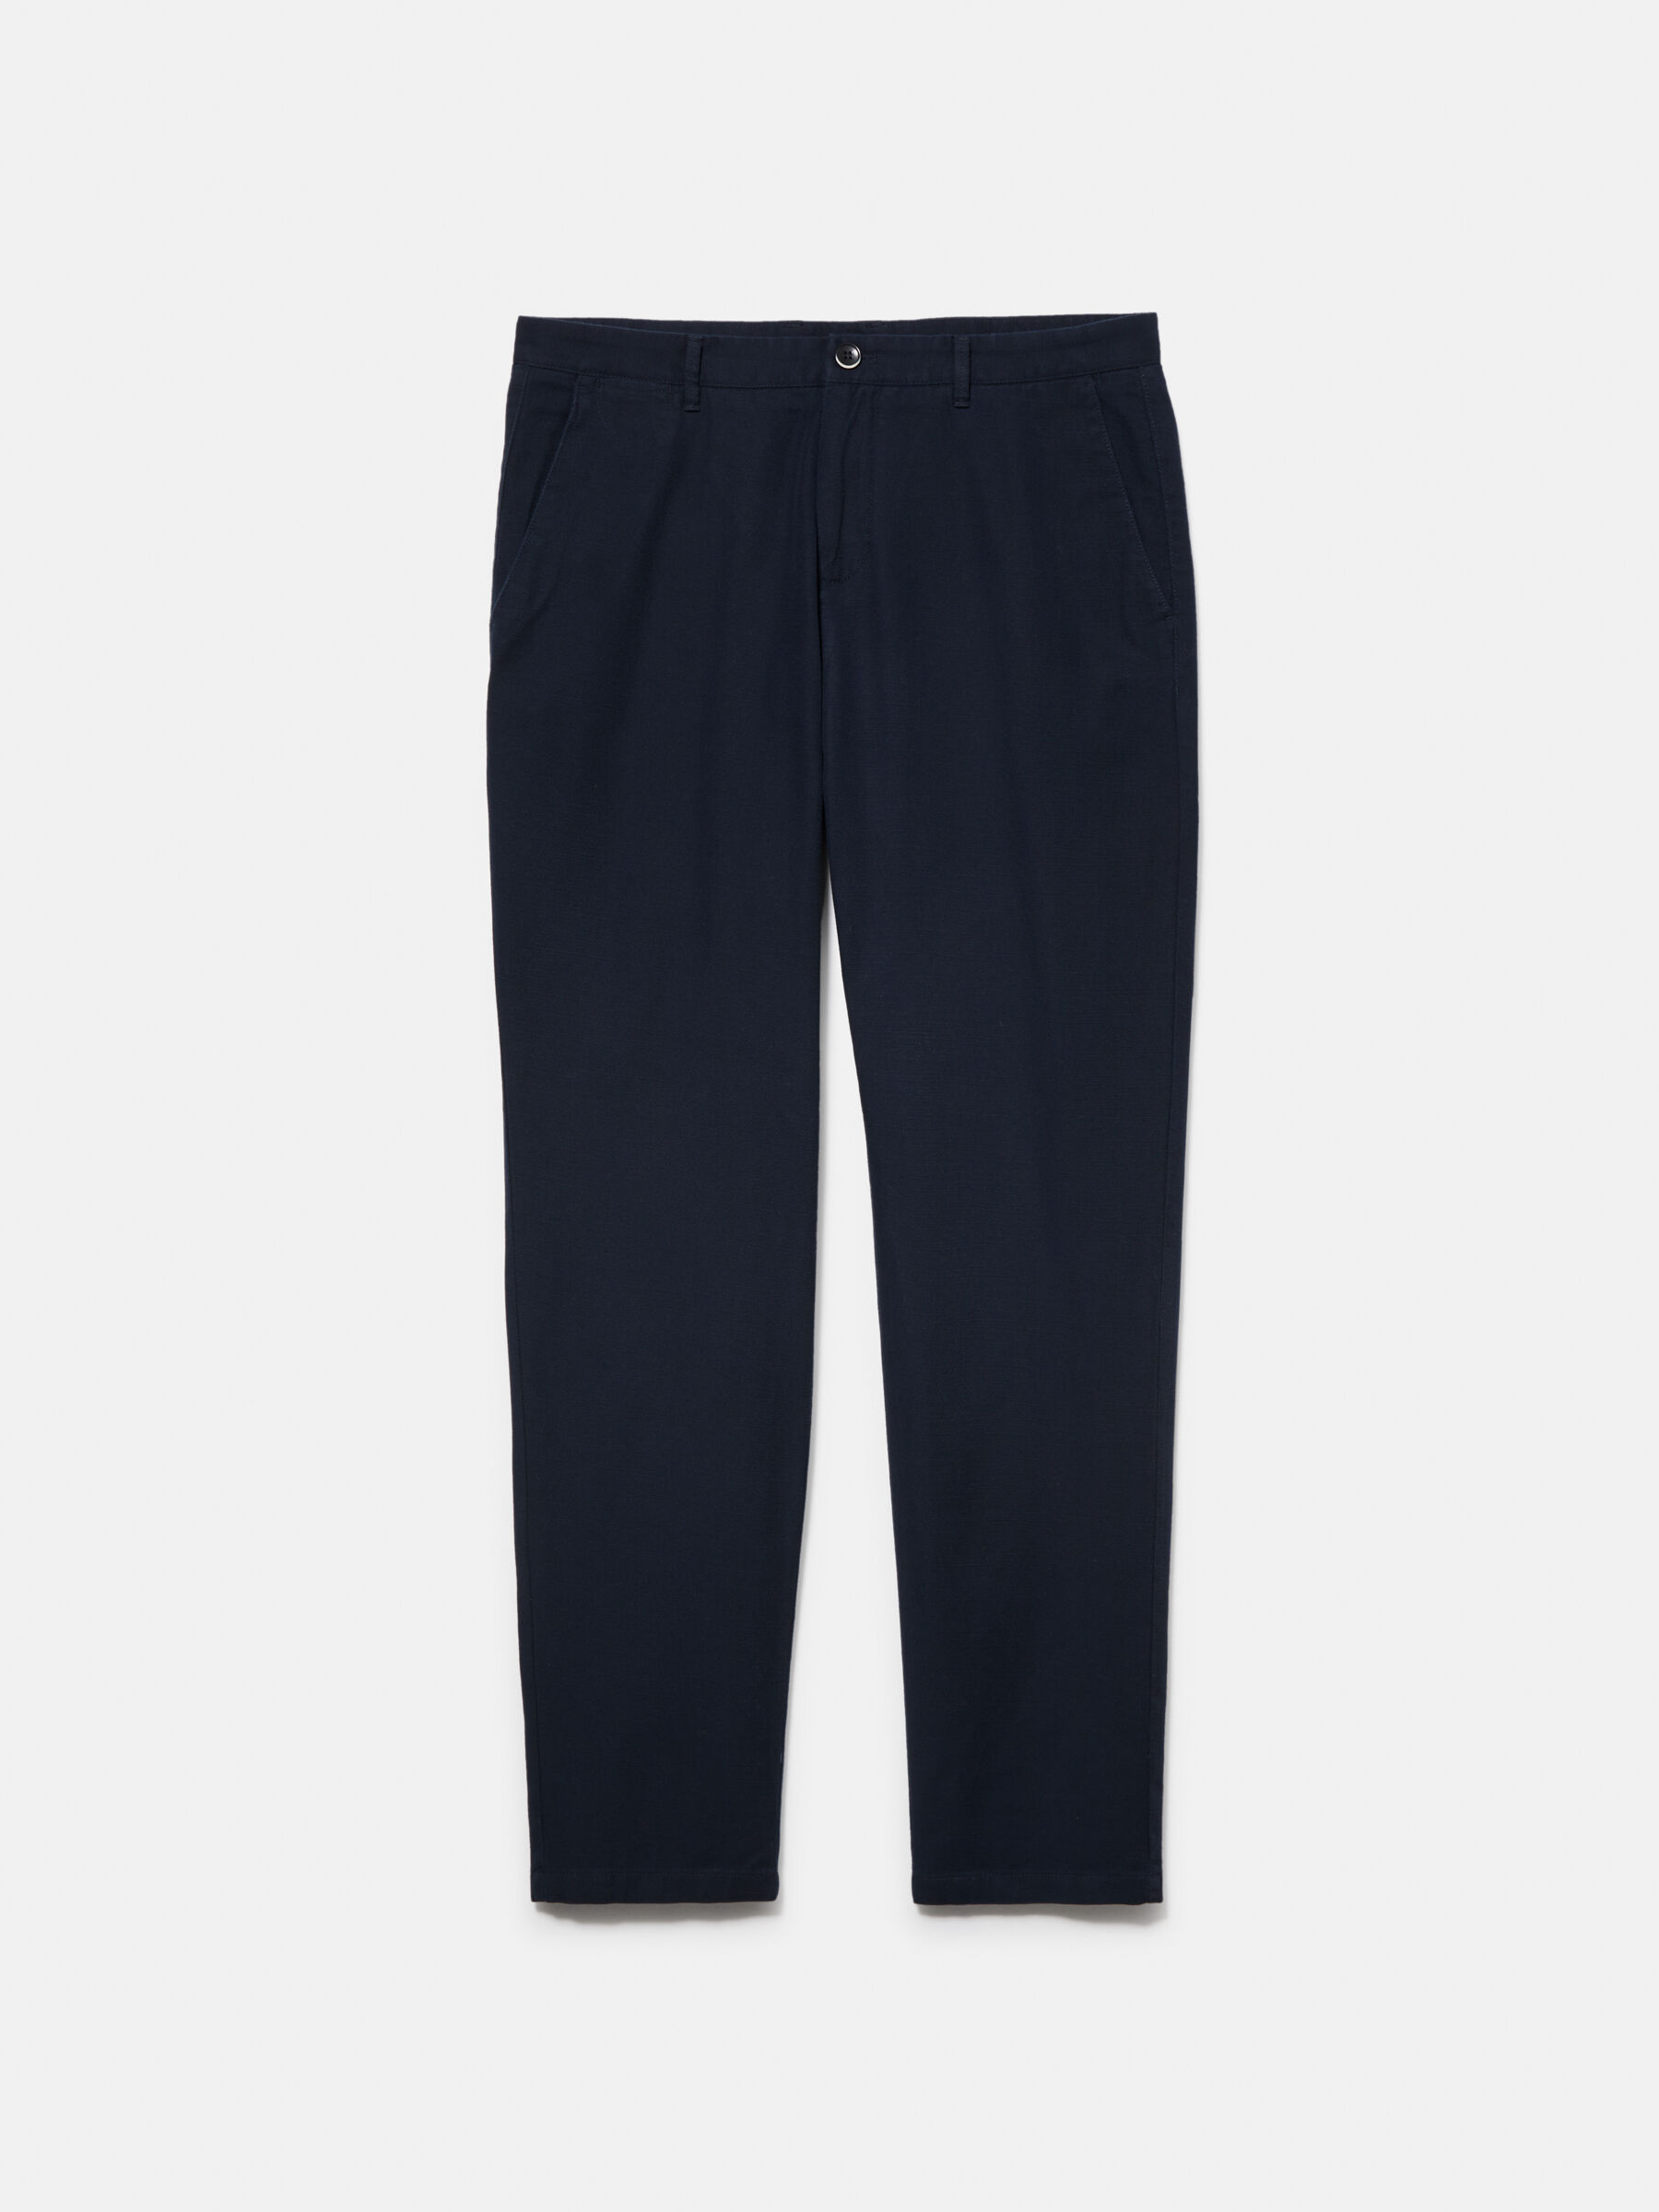 Navy blue cotton no-tucks sartorial trousers.